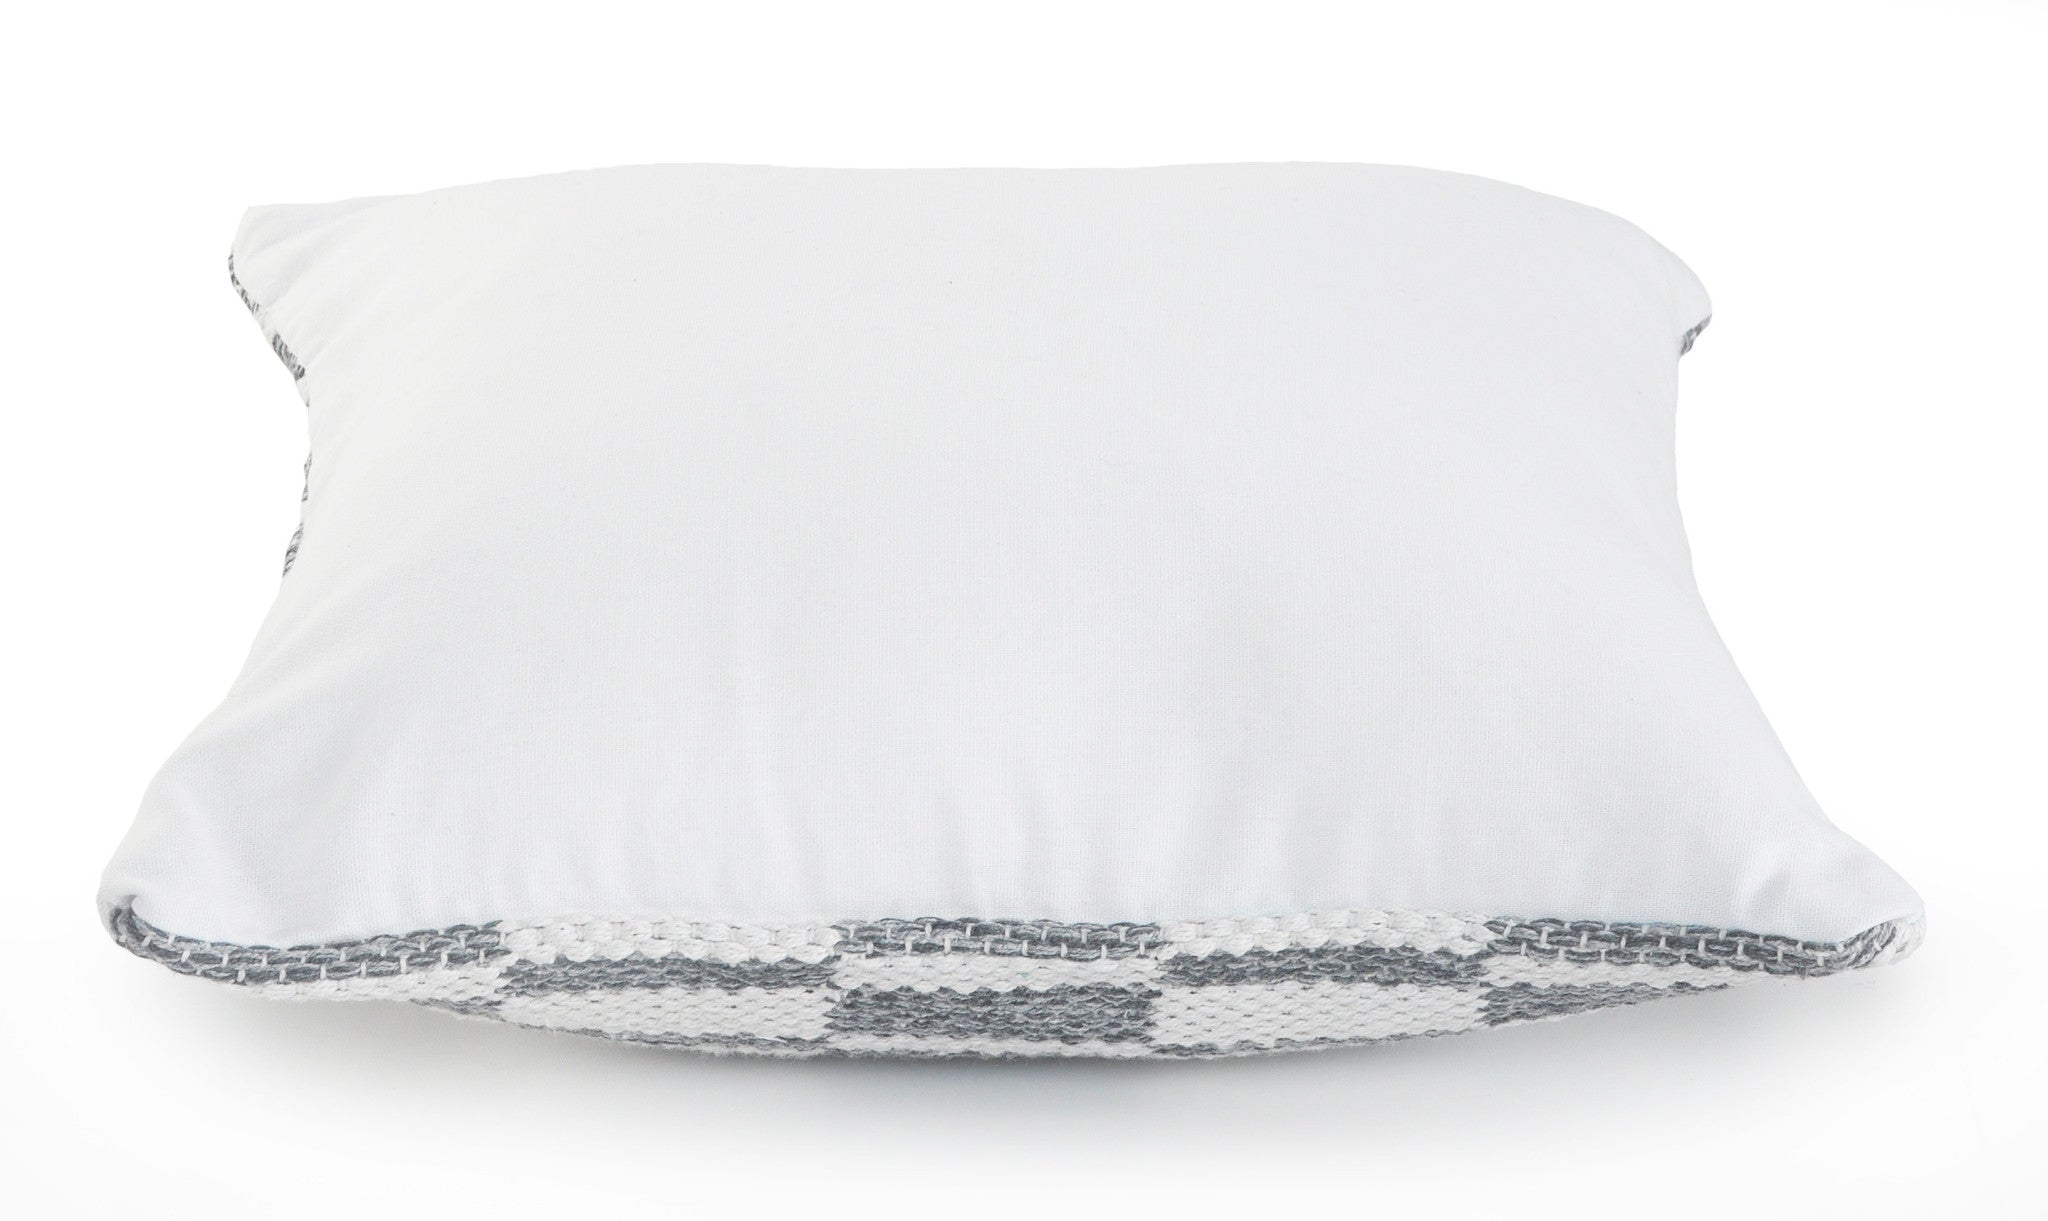 18" X 18" Gray And White 100% Cotton Geometric Zippered Pillow